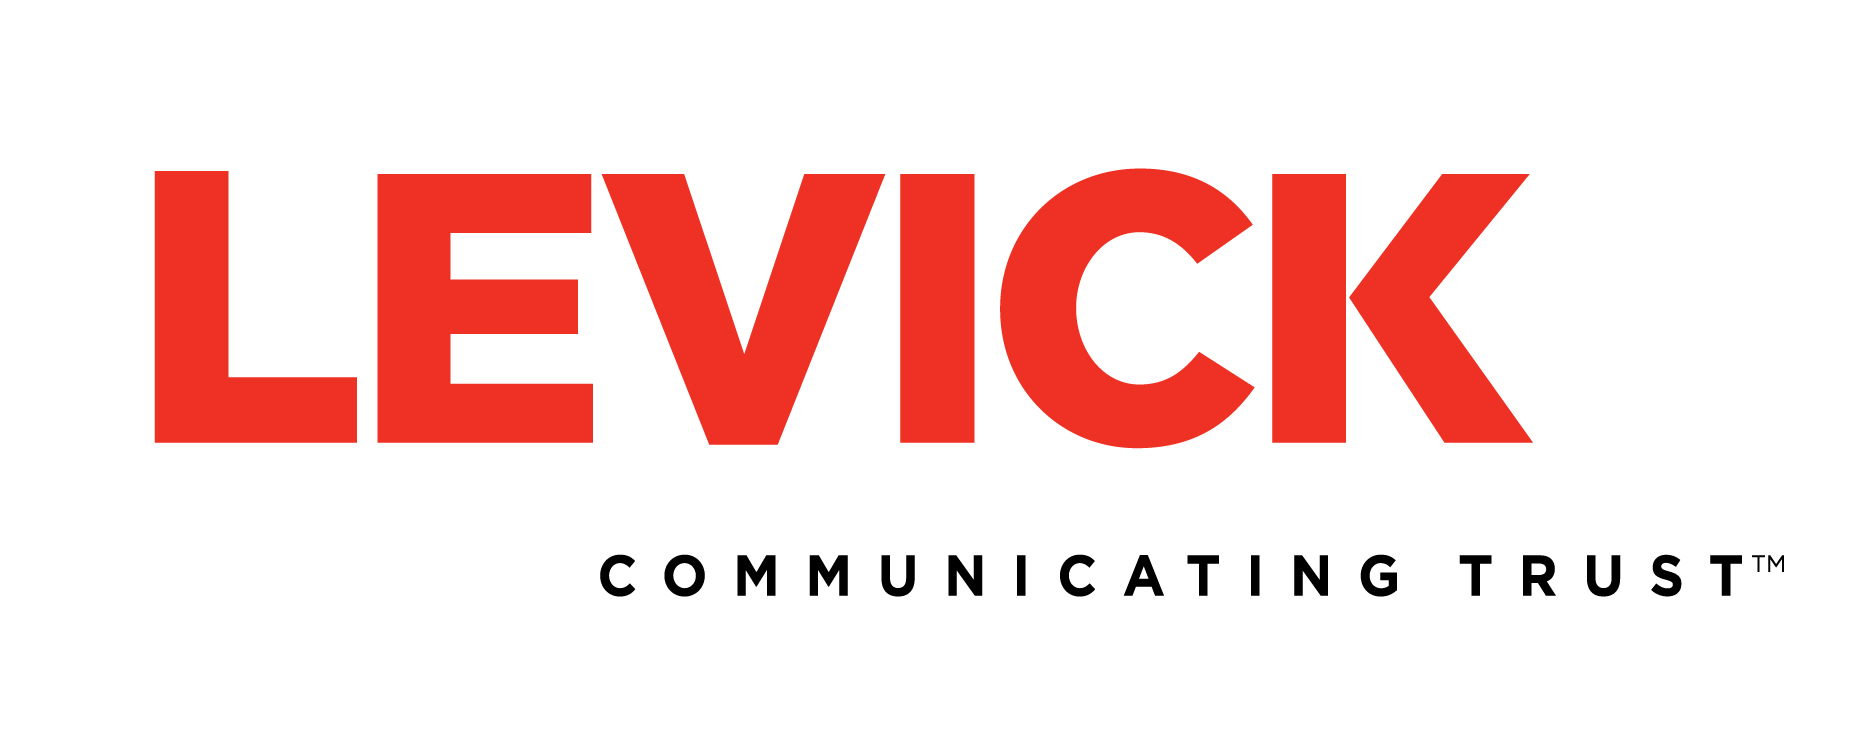  Best Corporate Public Relations Agency Logo: Levick